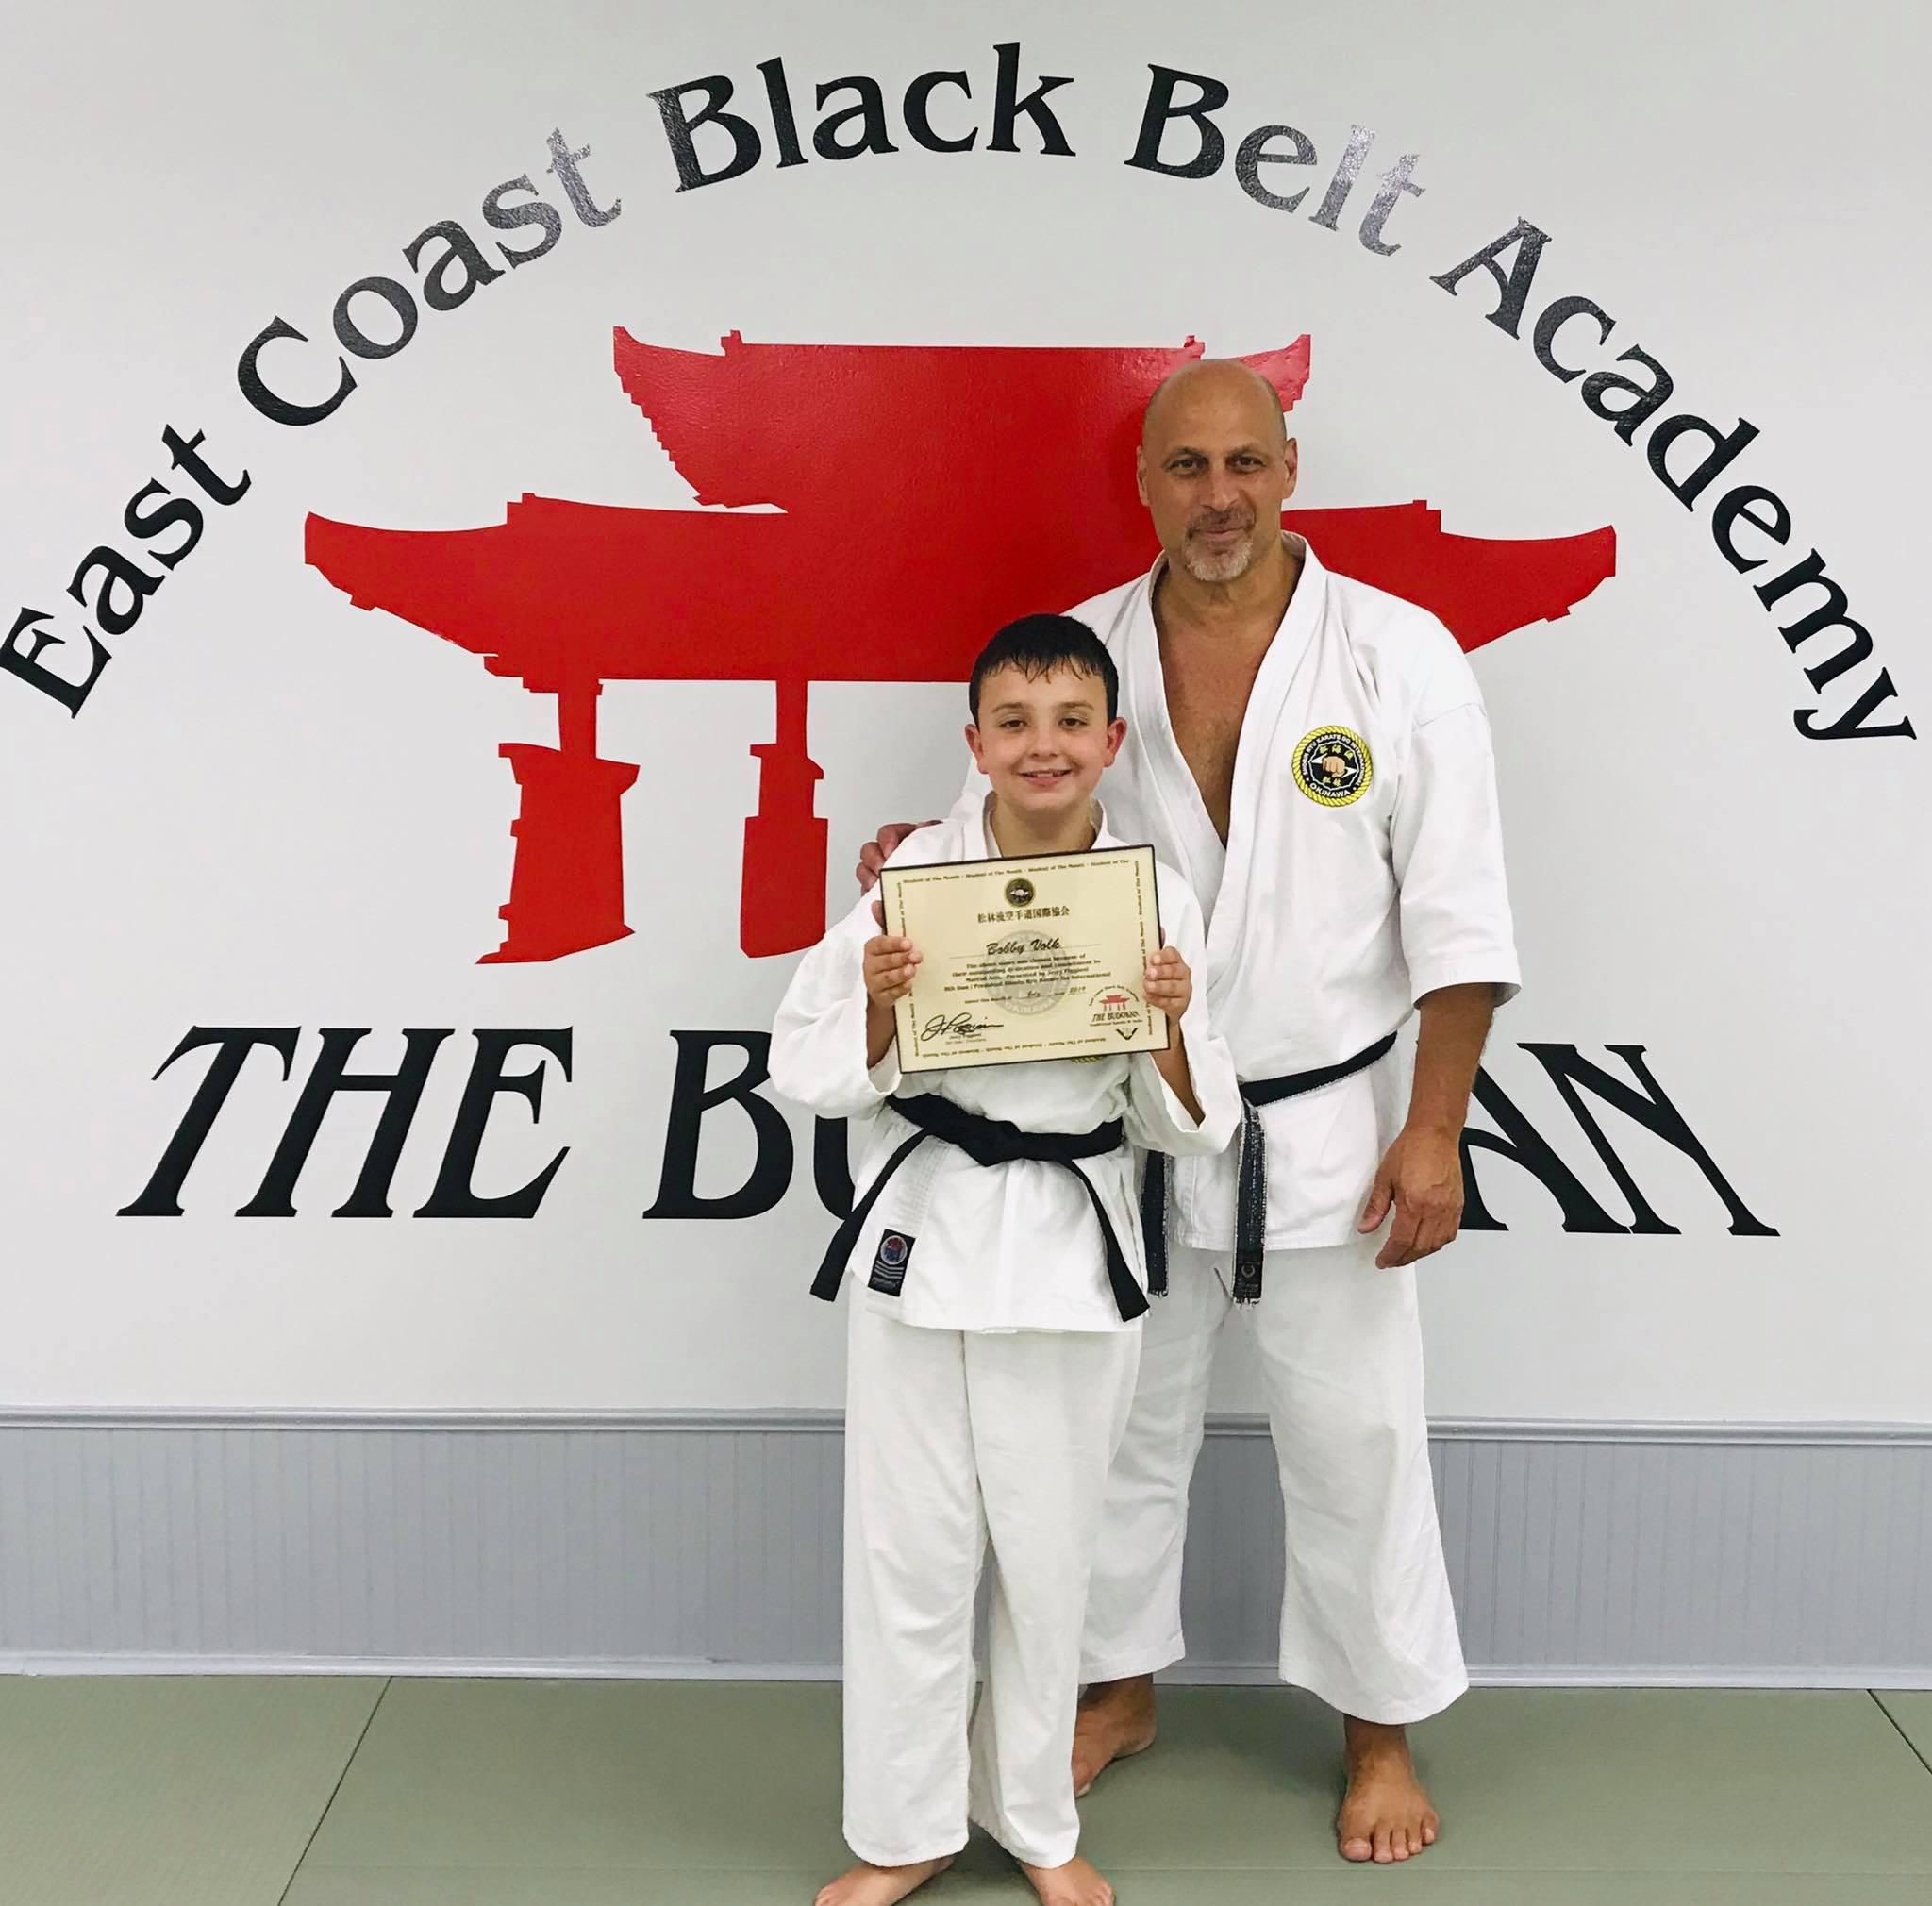 East Coast Black Belt Academy Photo